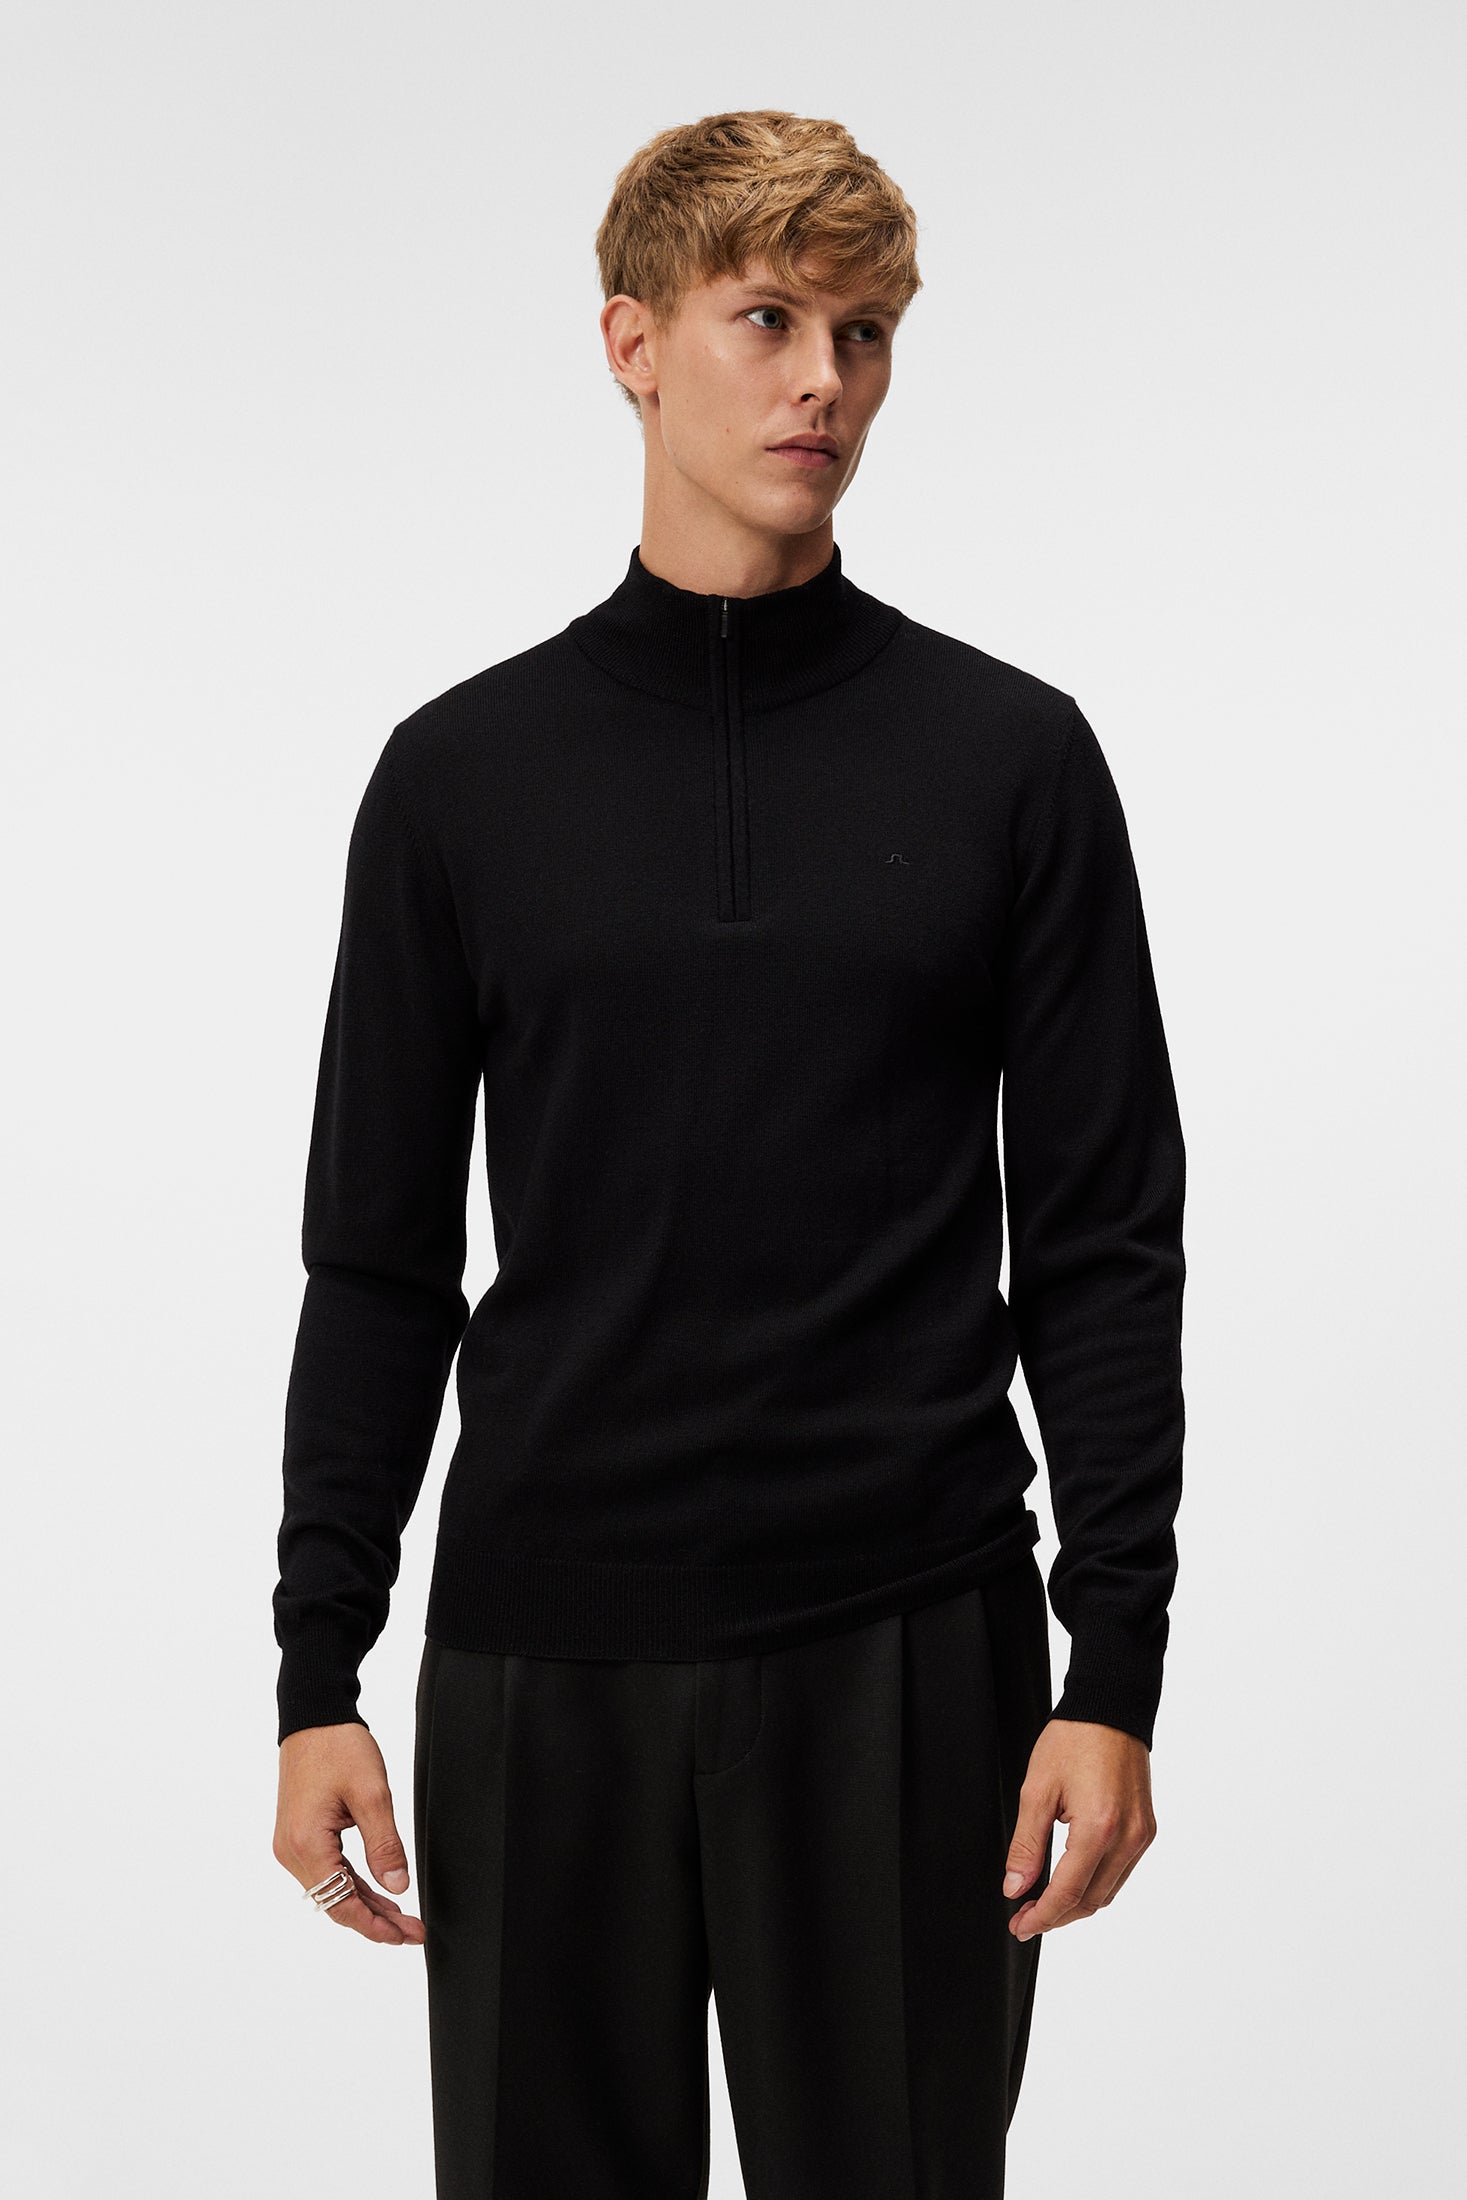 J.LINDEBERG Men's Fashion Sweaters & Sweatshirts